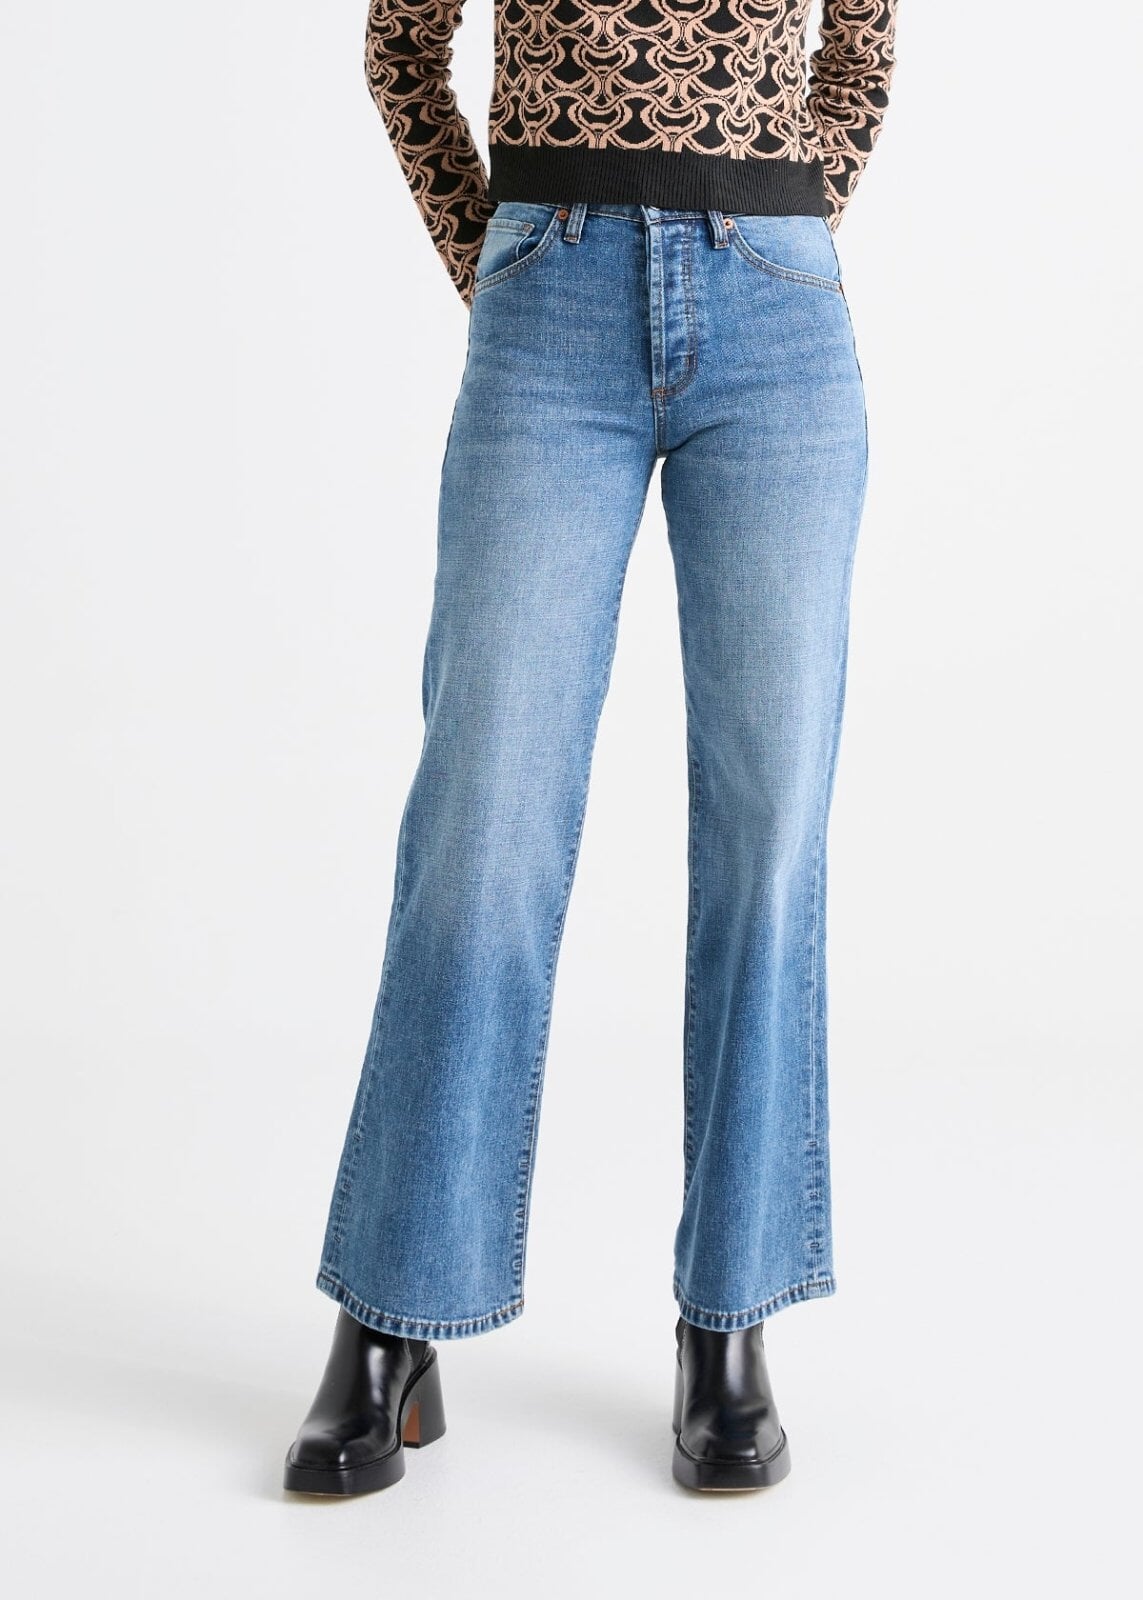 Vintage Wide Leg Women's Jeans - Medium Wash